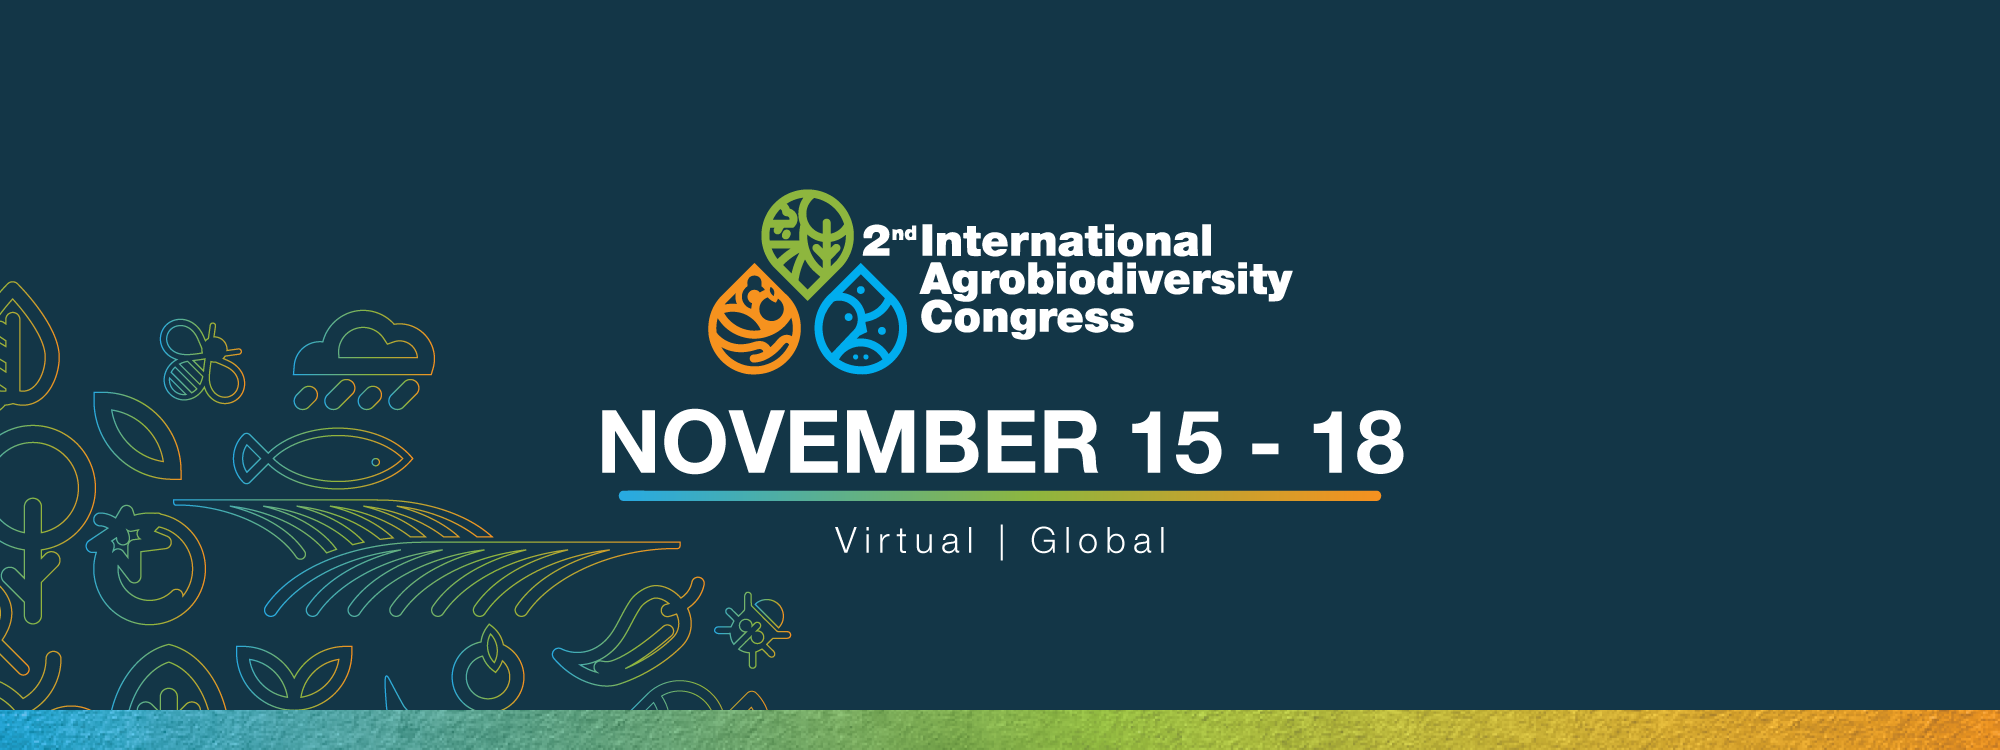 2nd International Agrobiodiversity Congress